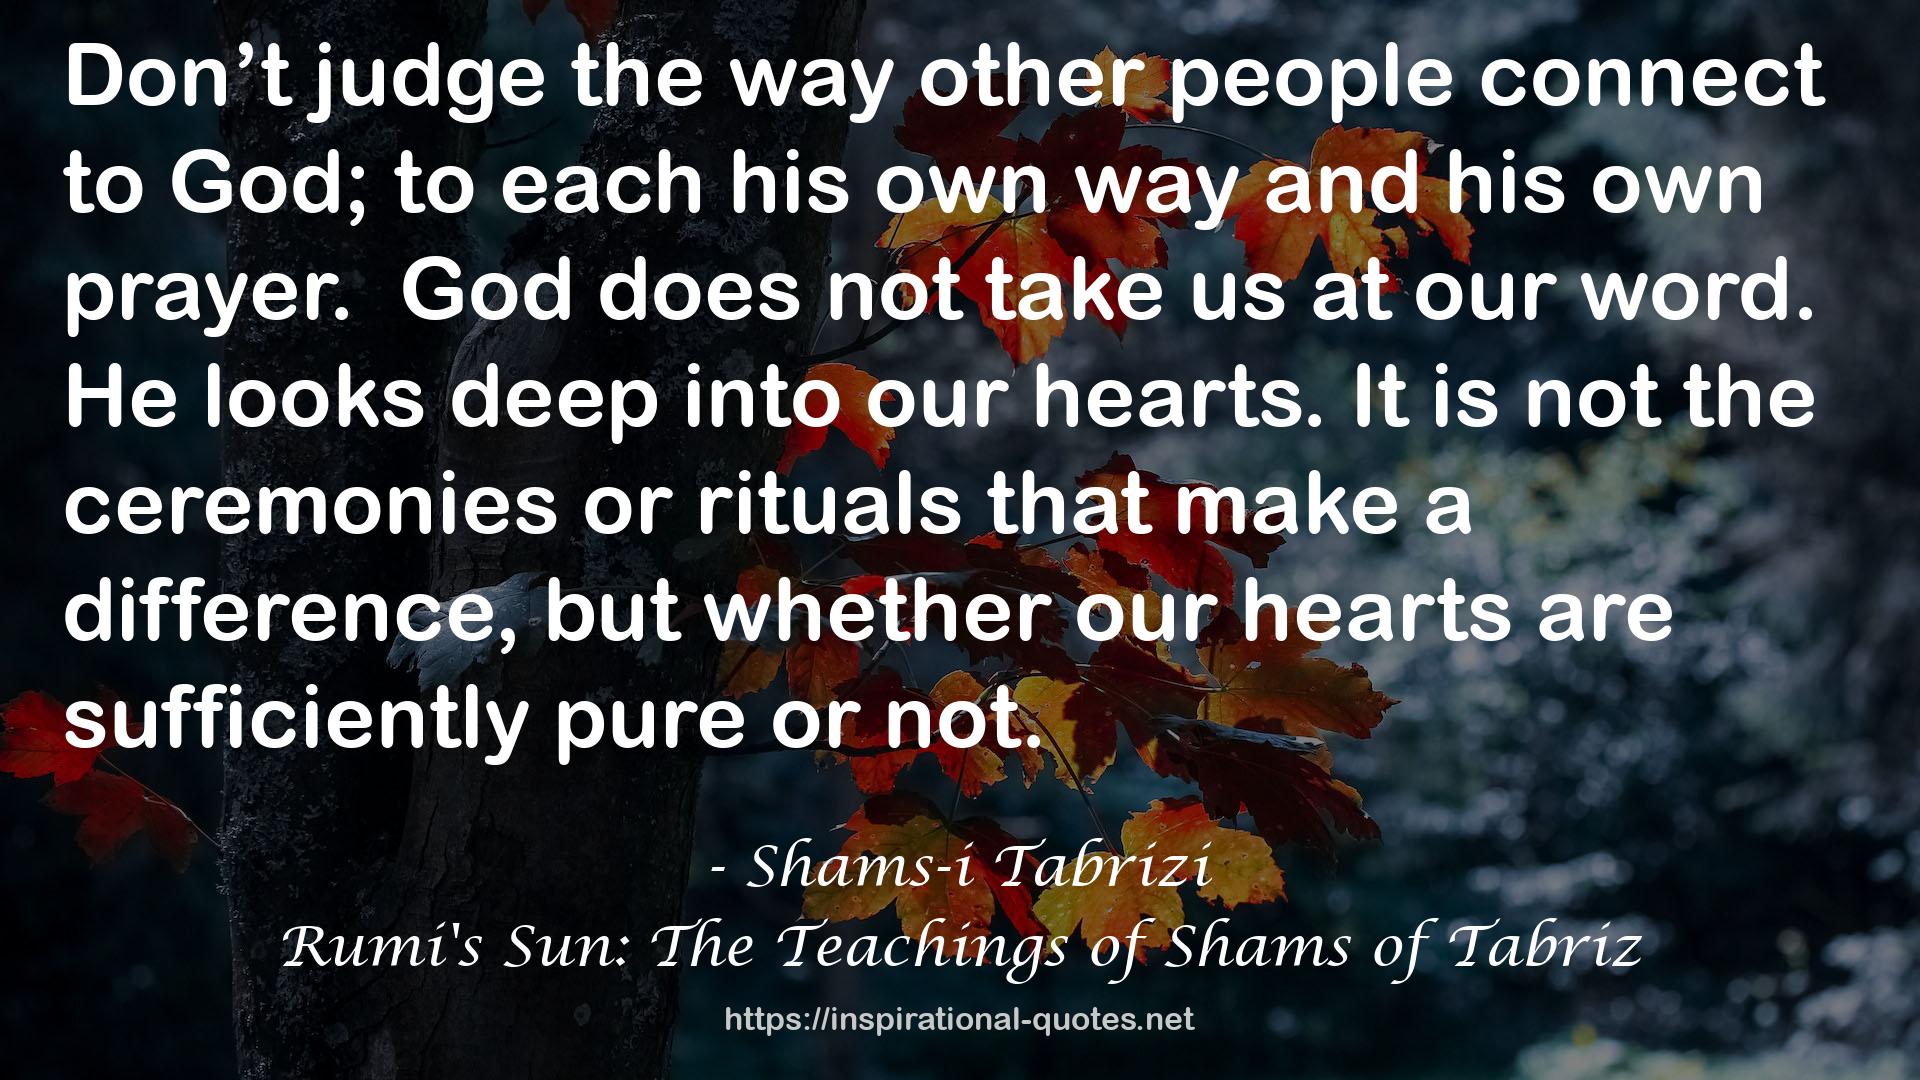 Rumi's Sun: The Teachings of Shams of Tabriz QUOTES